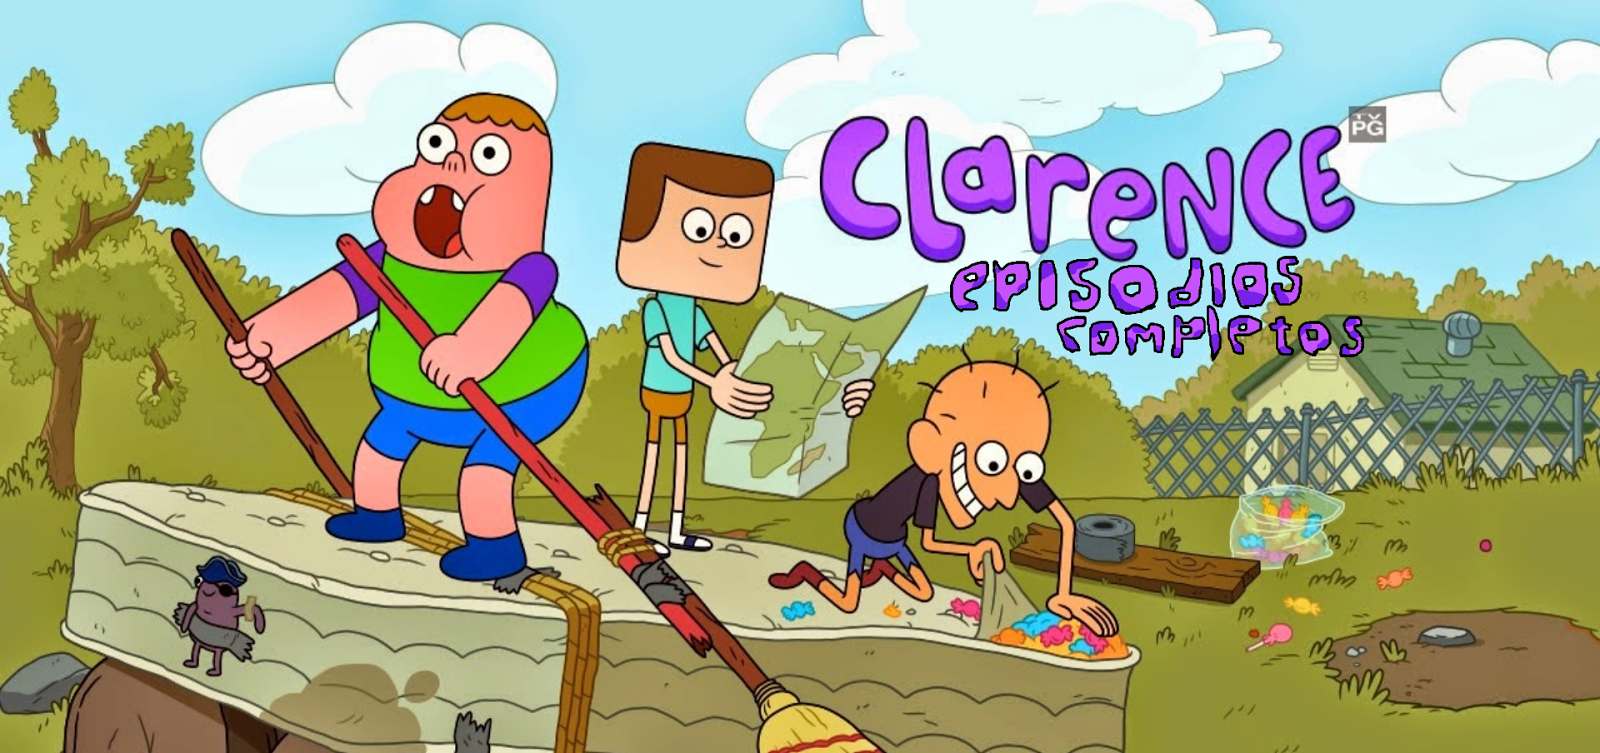 Clarence episodios completos